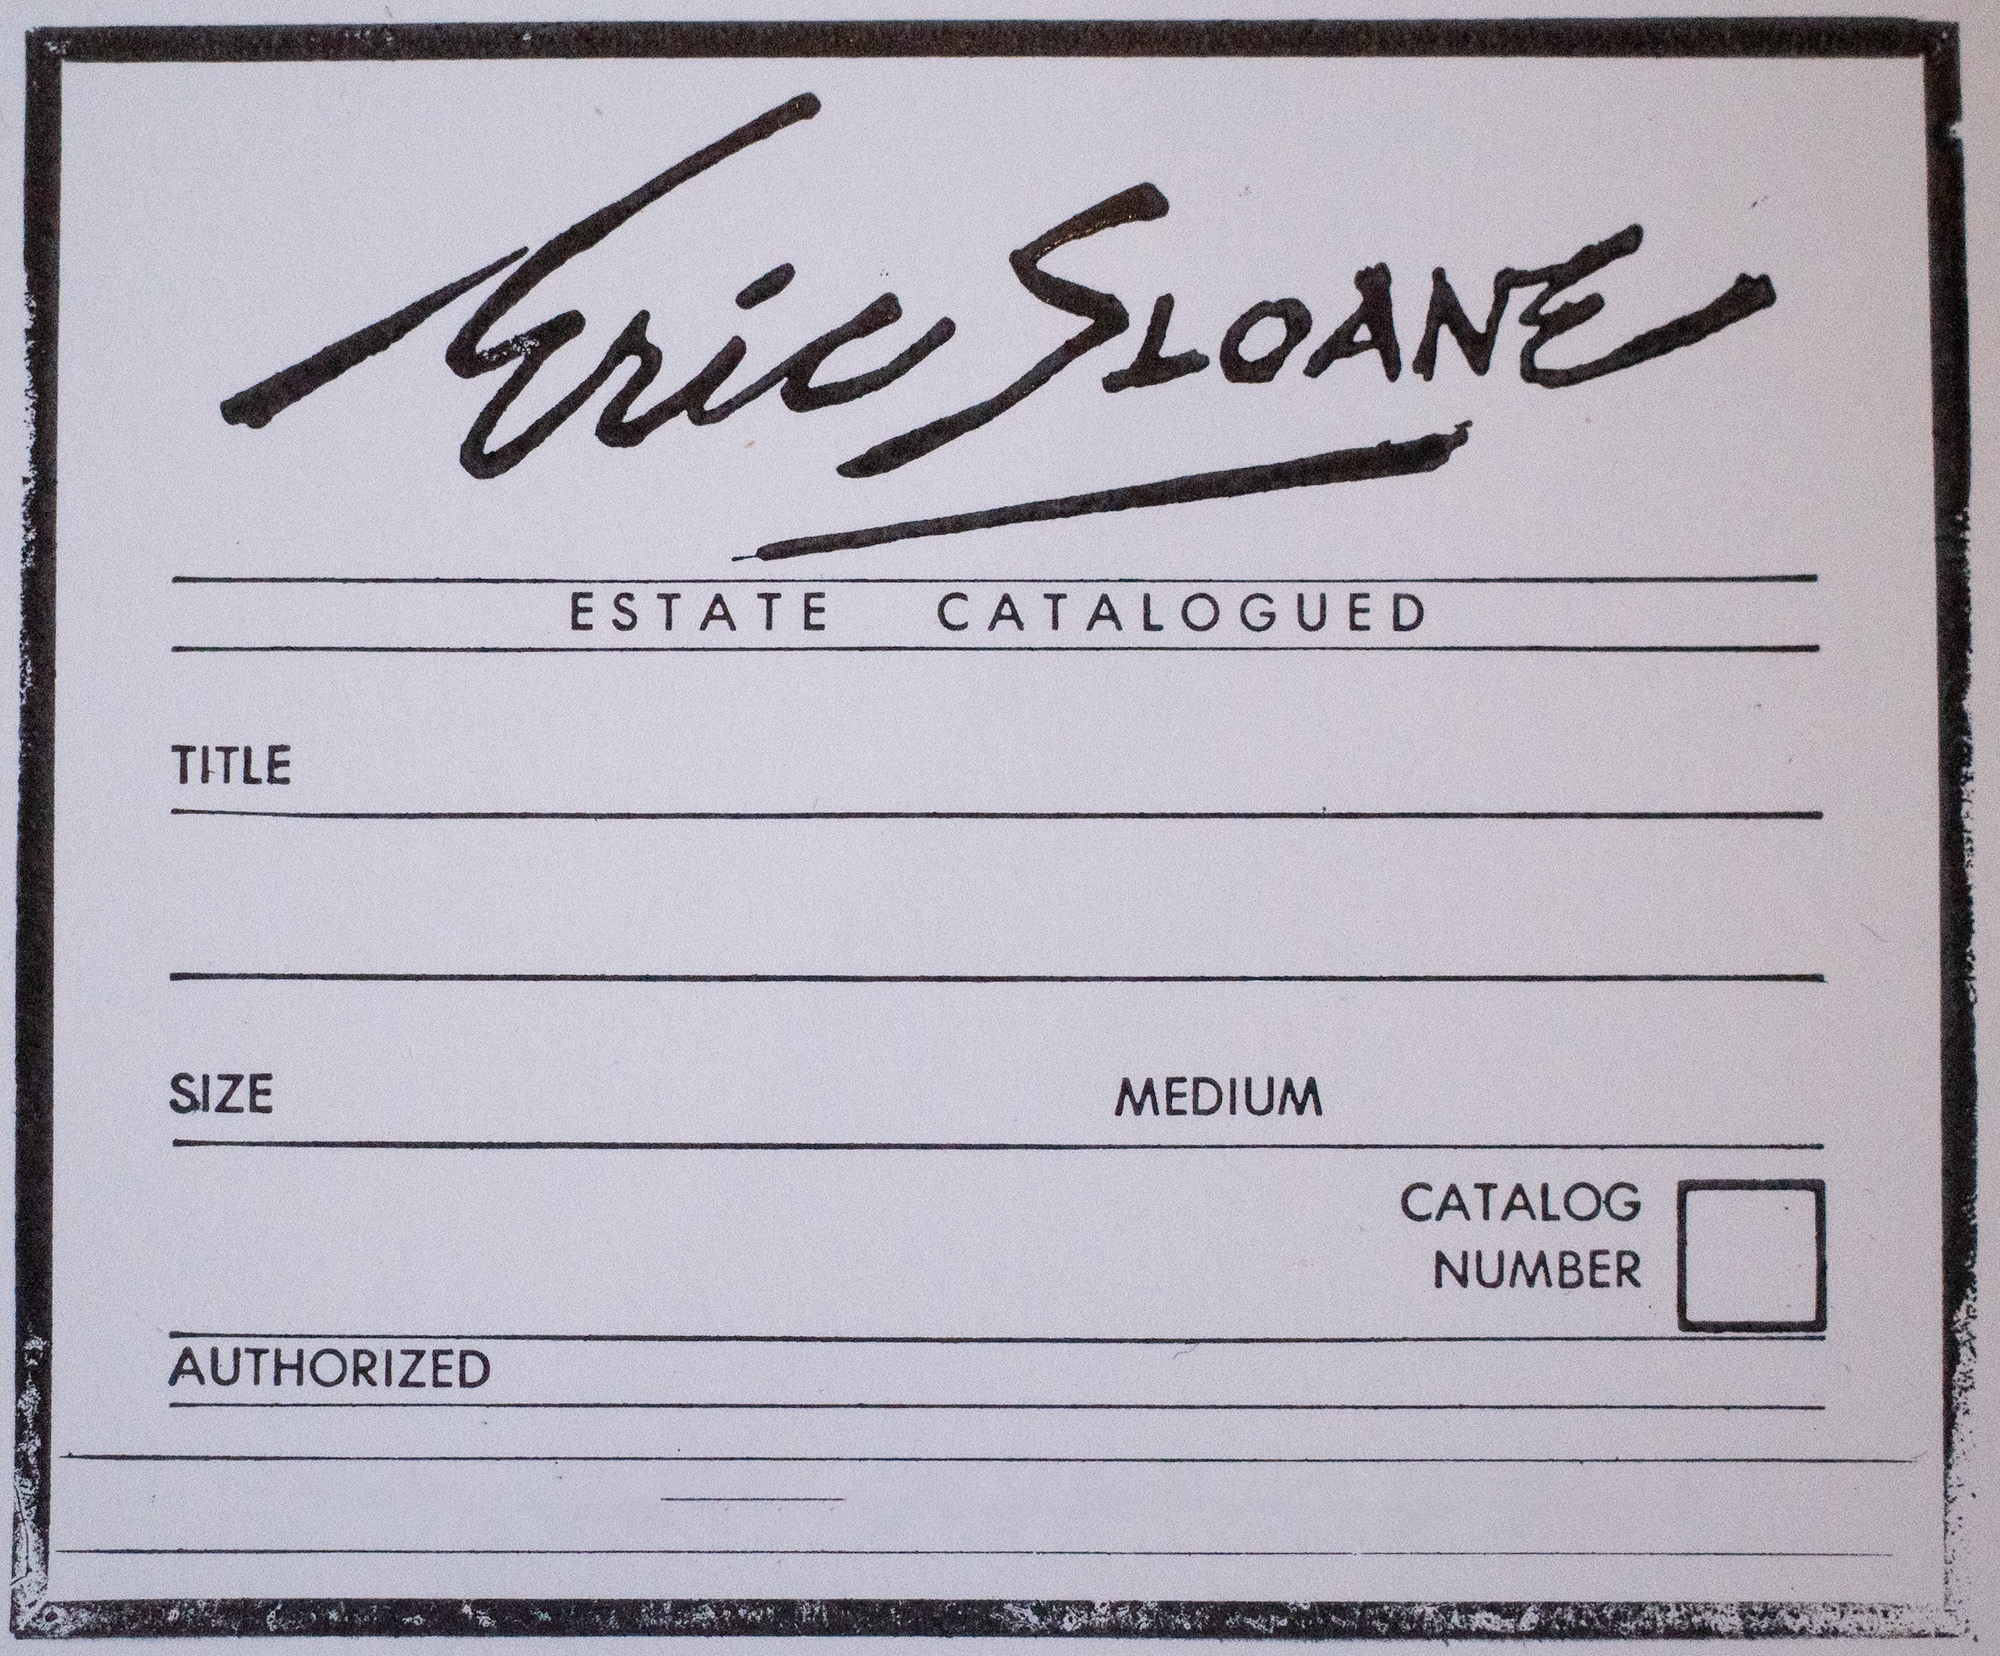 Eric Sloane Estate Official Catalog Format